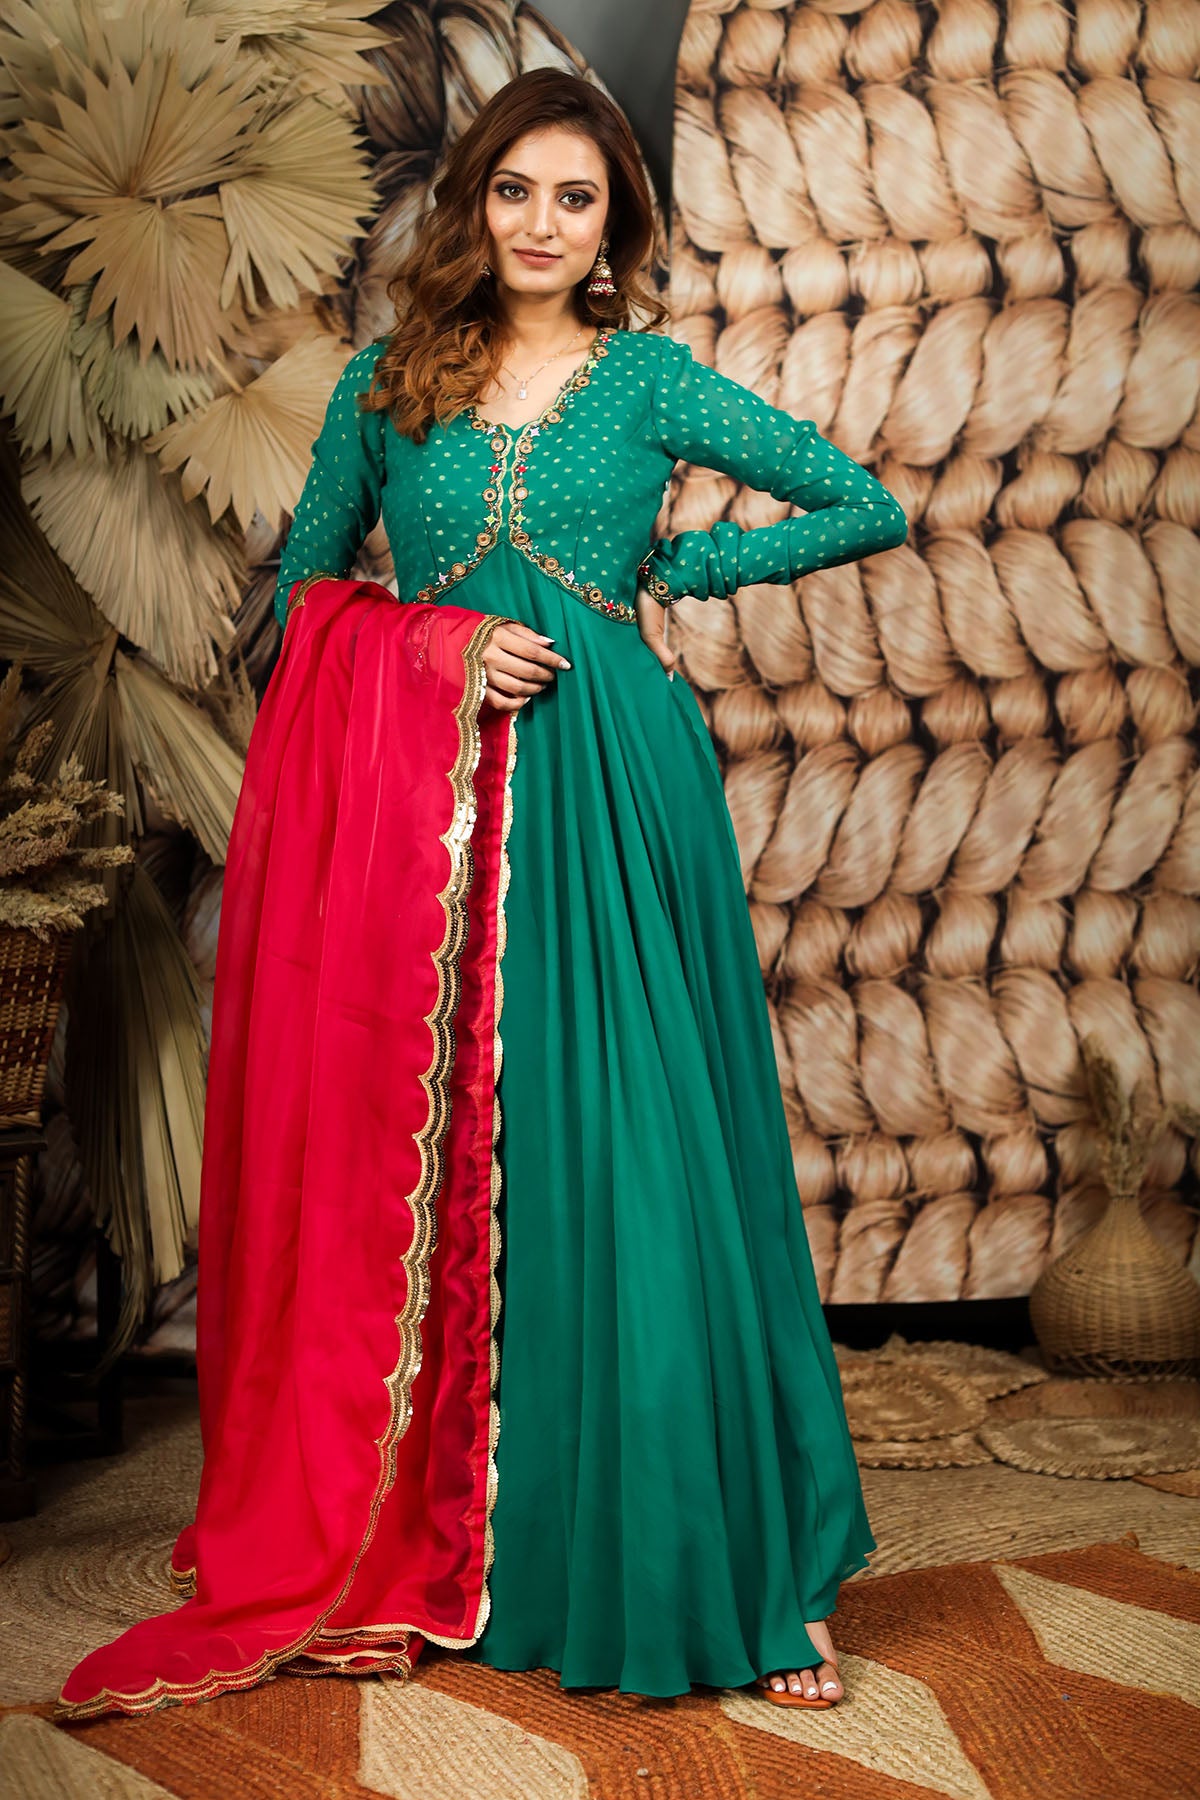 Kiana Women Ethnic Dress Pink Dress - Buy Kiana Women Ethnic Dress Pink  Dress Online at Best Prices in India | Flipkart.com